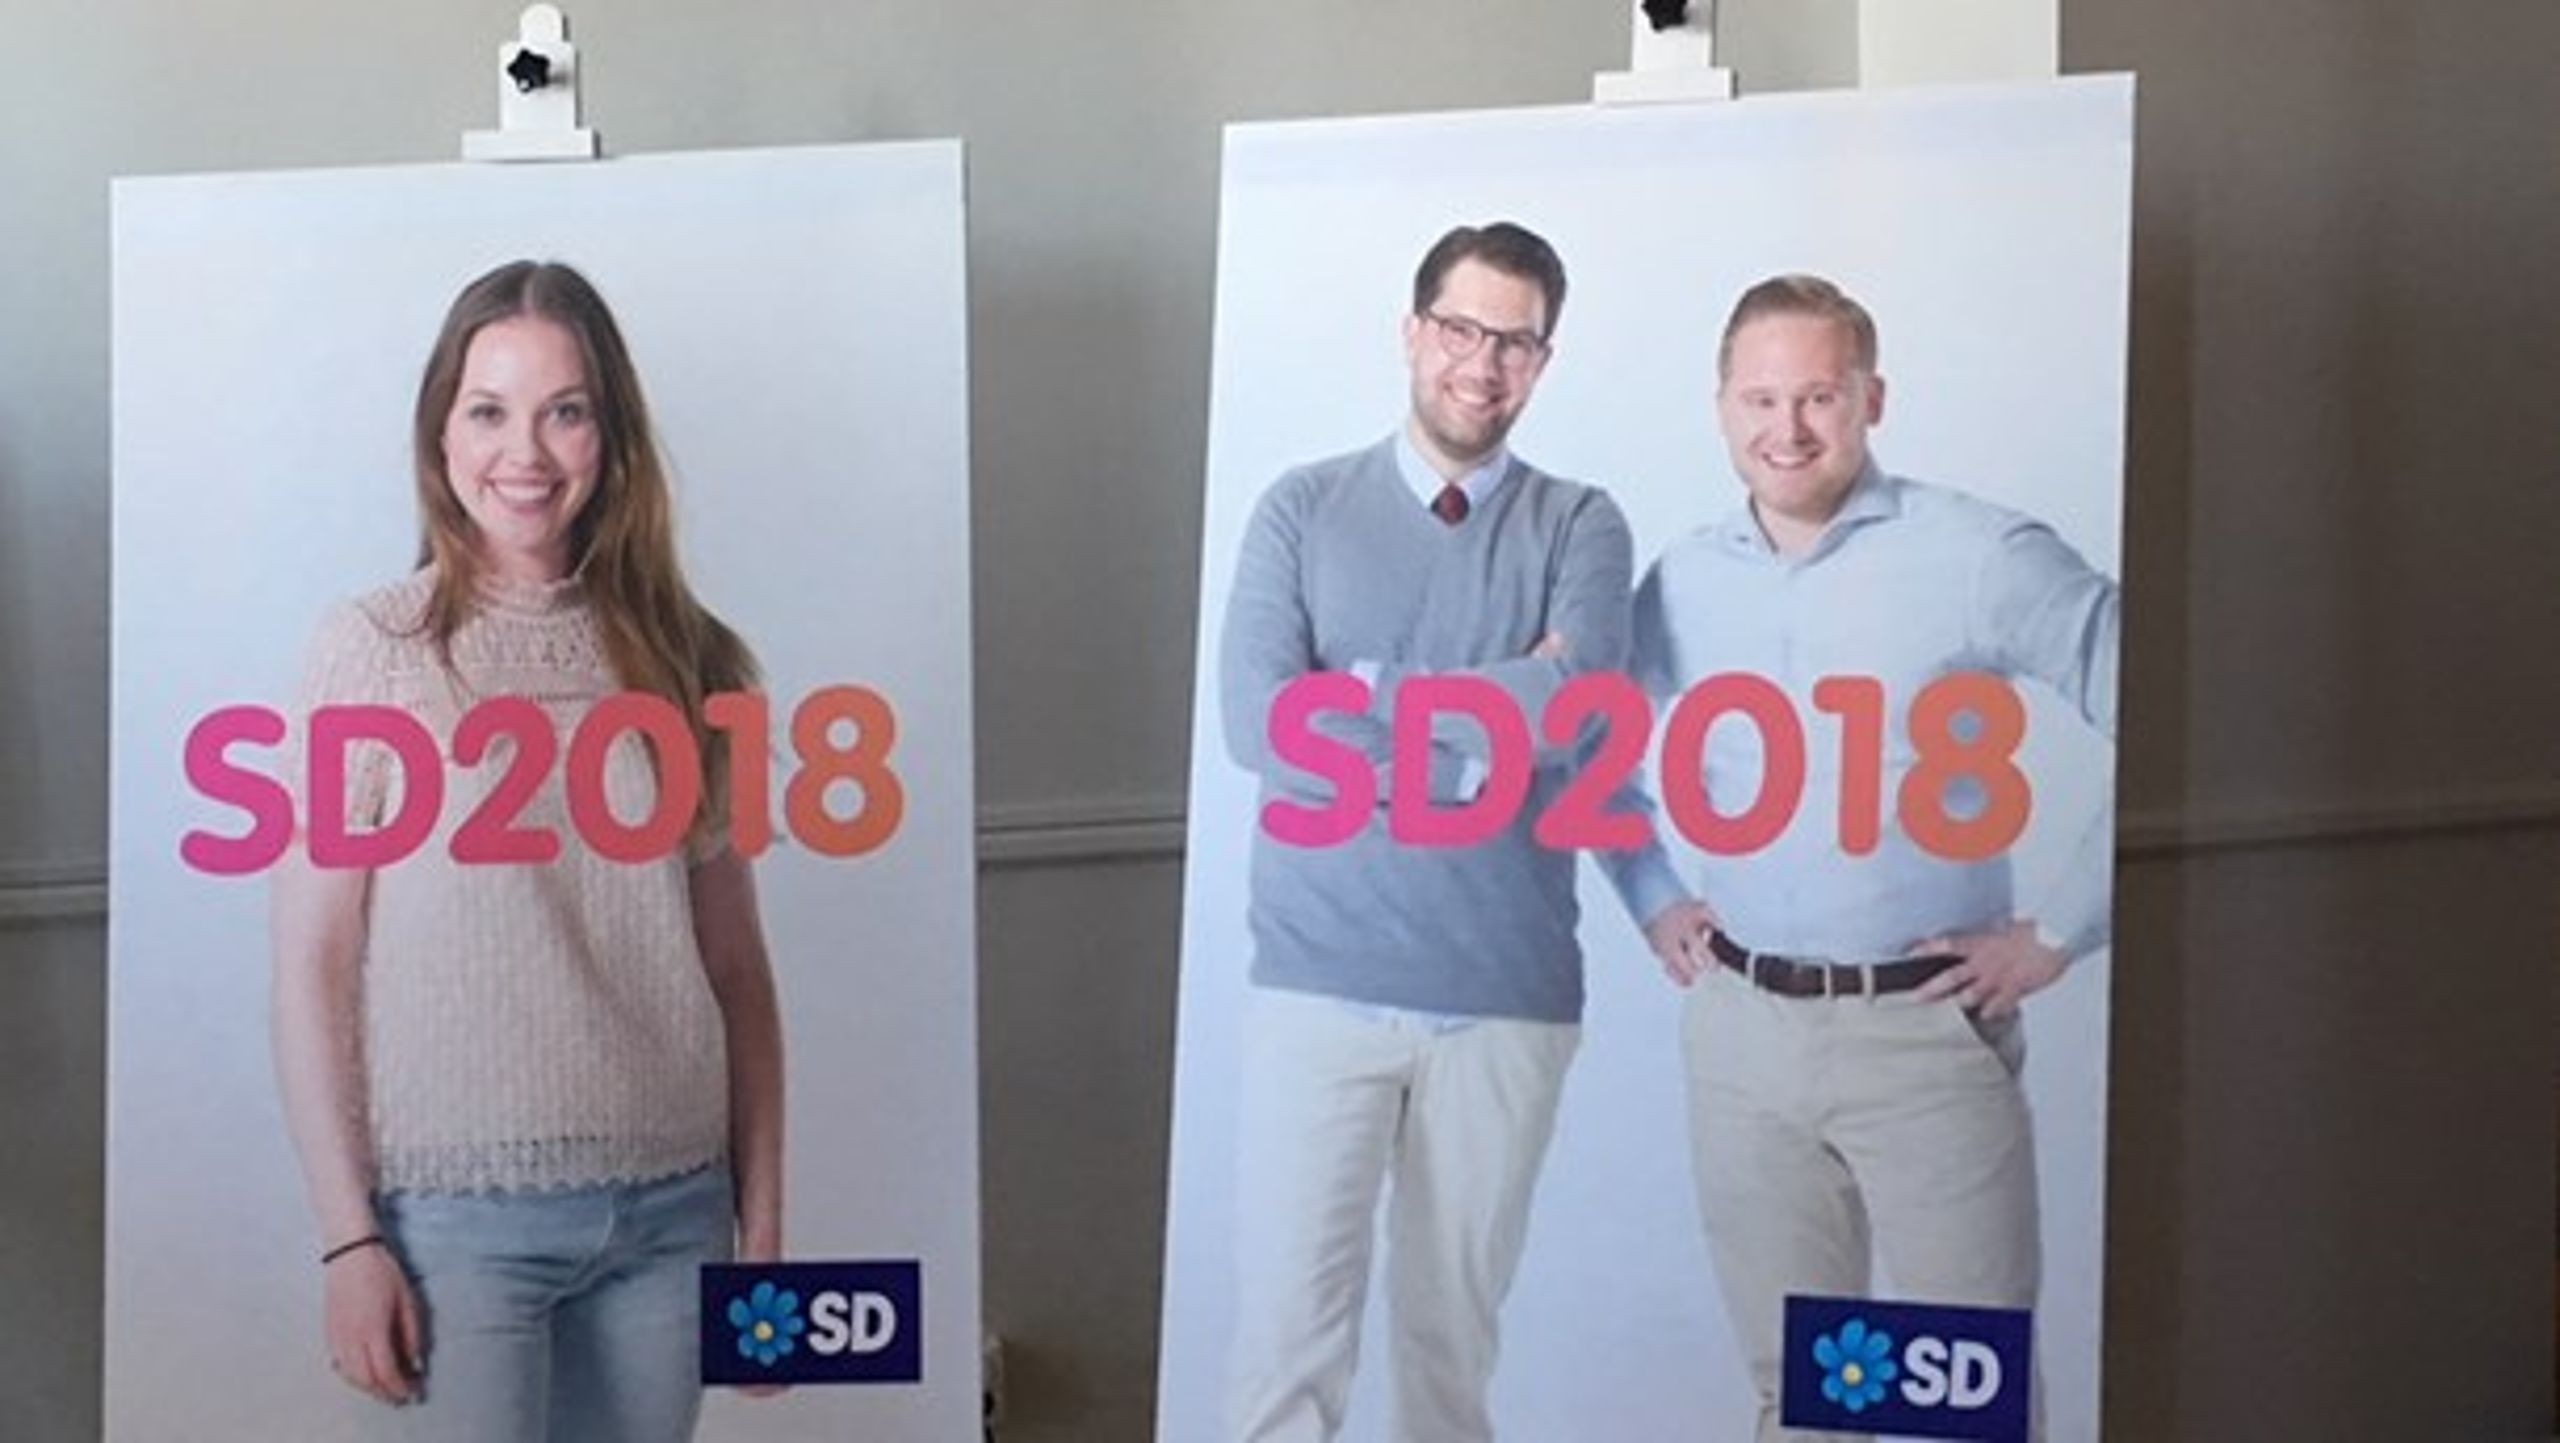 Två av Sverigedemokraternas valaffischer med budskapet "SD2018".